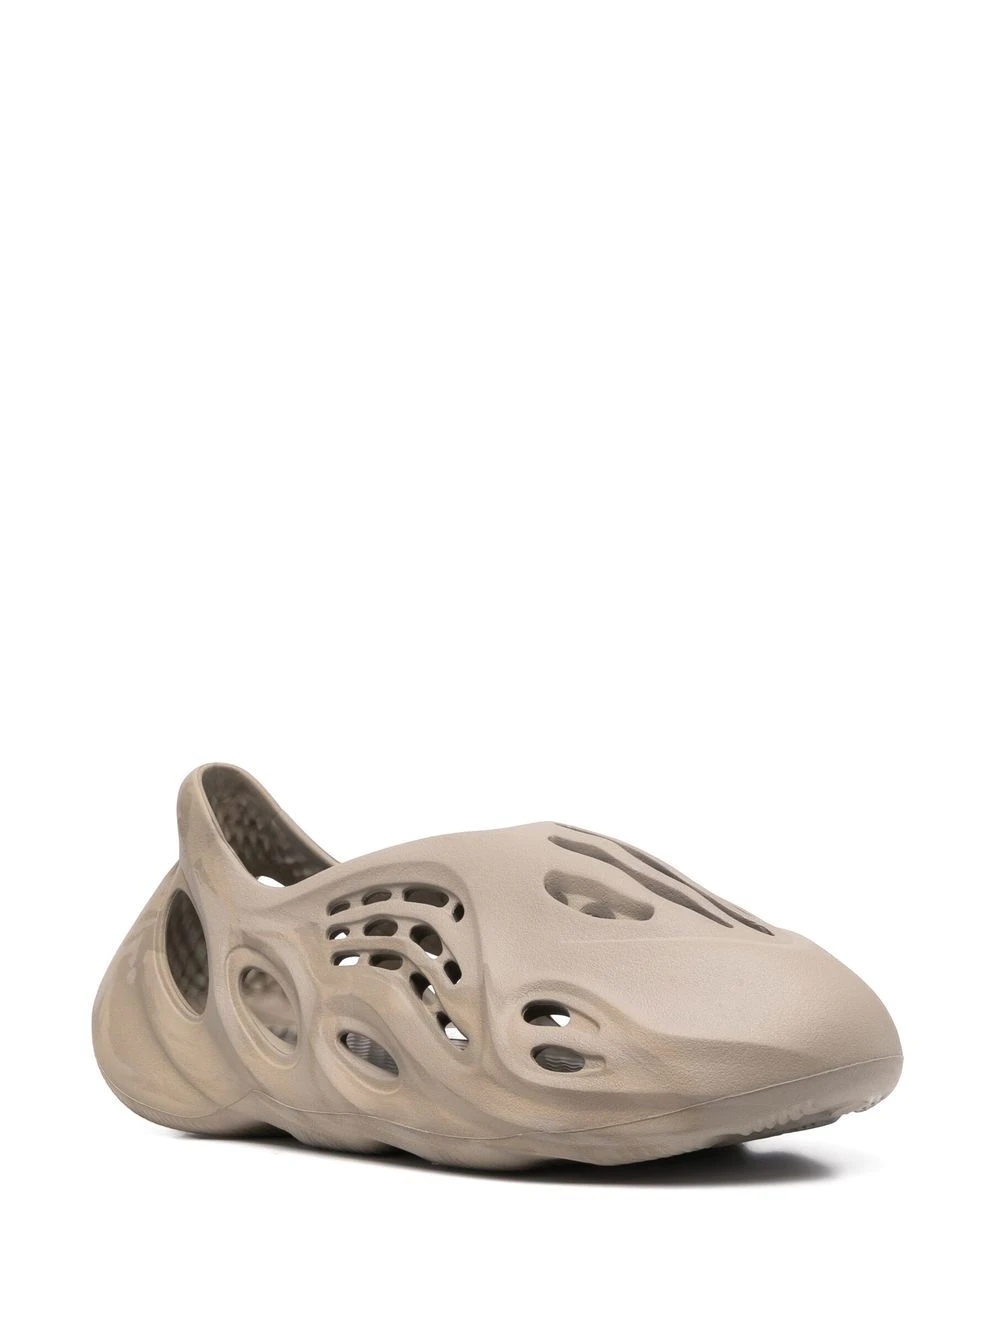 YEEZY Foam Runner "Stone Sage" sneakers - 1